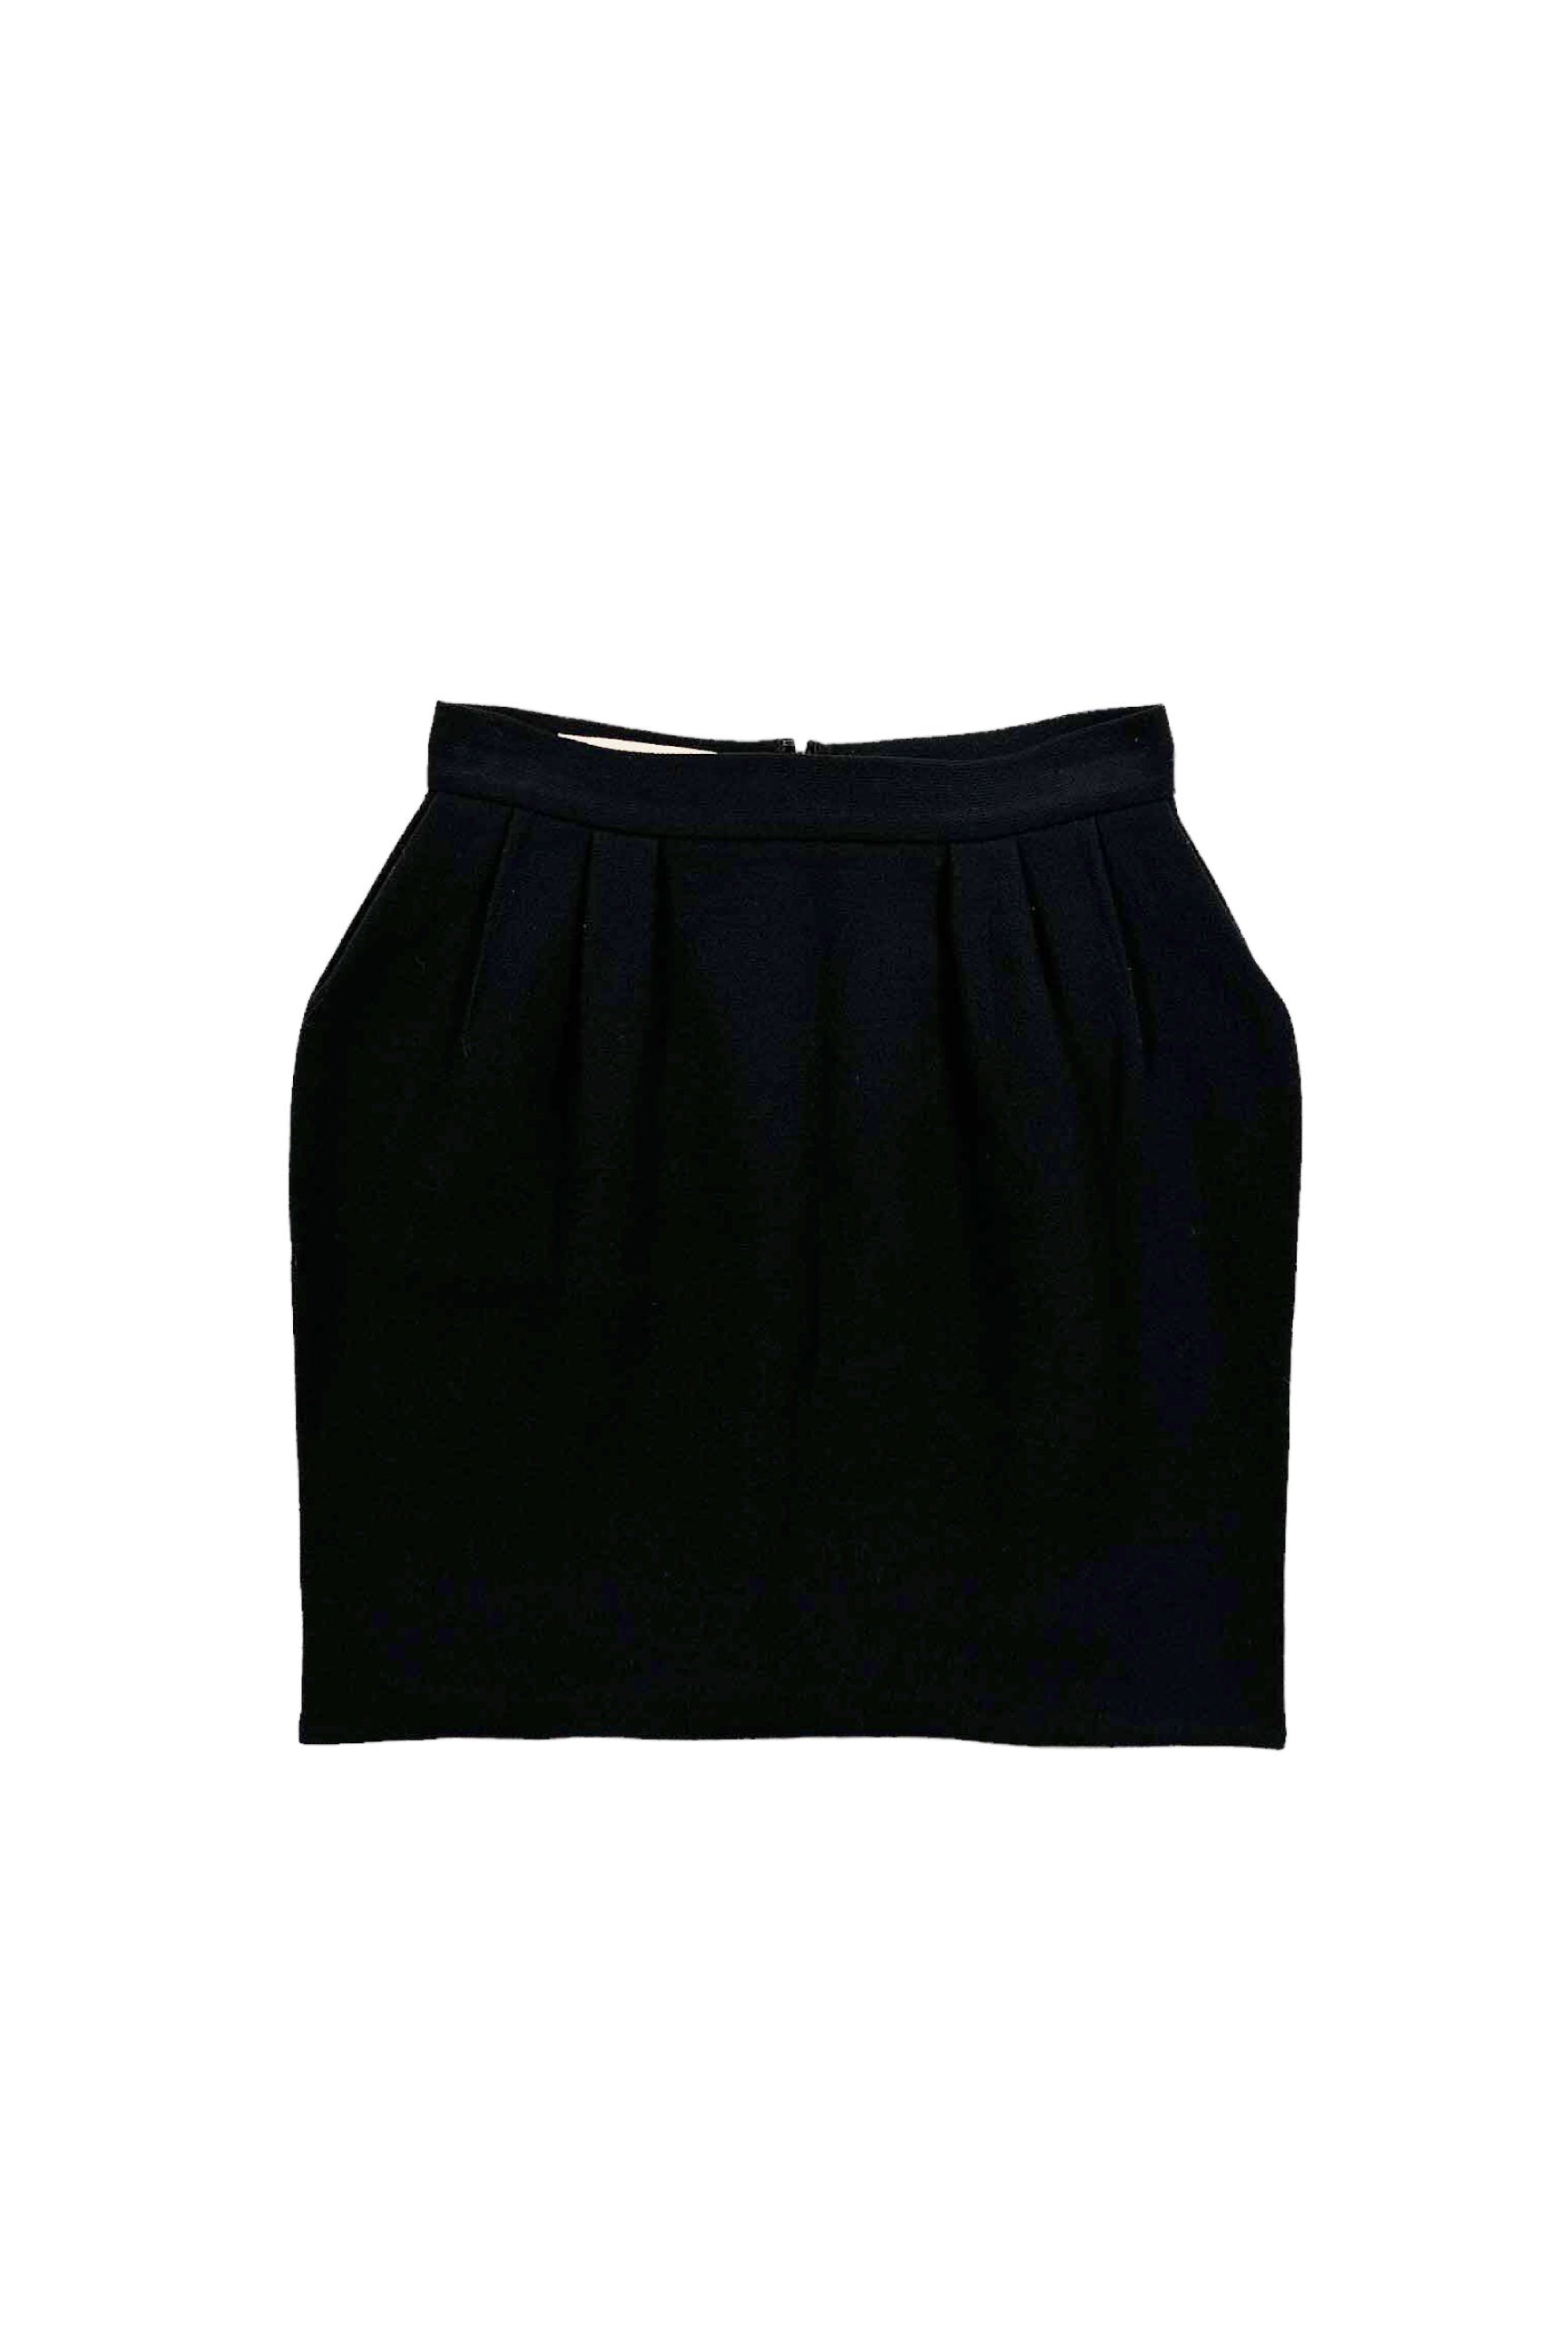 Made in ITALY MARNI mini skirt